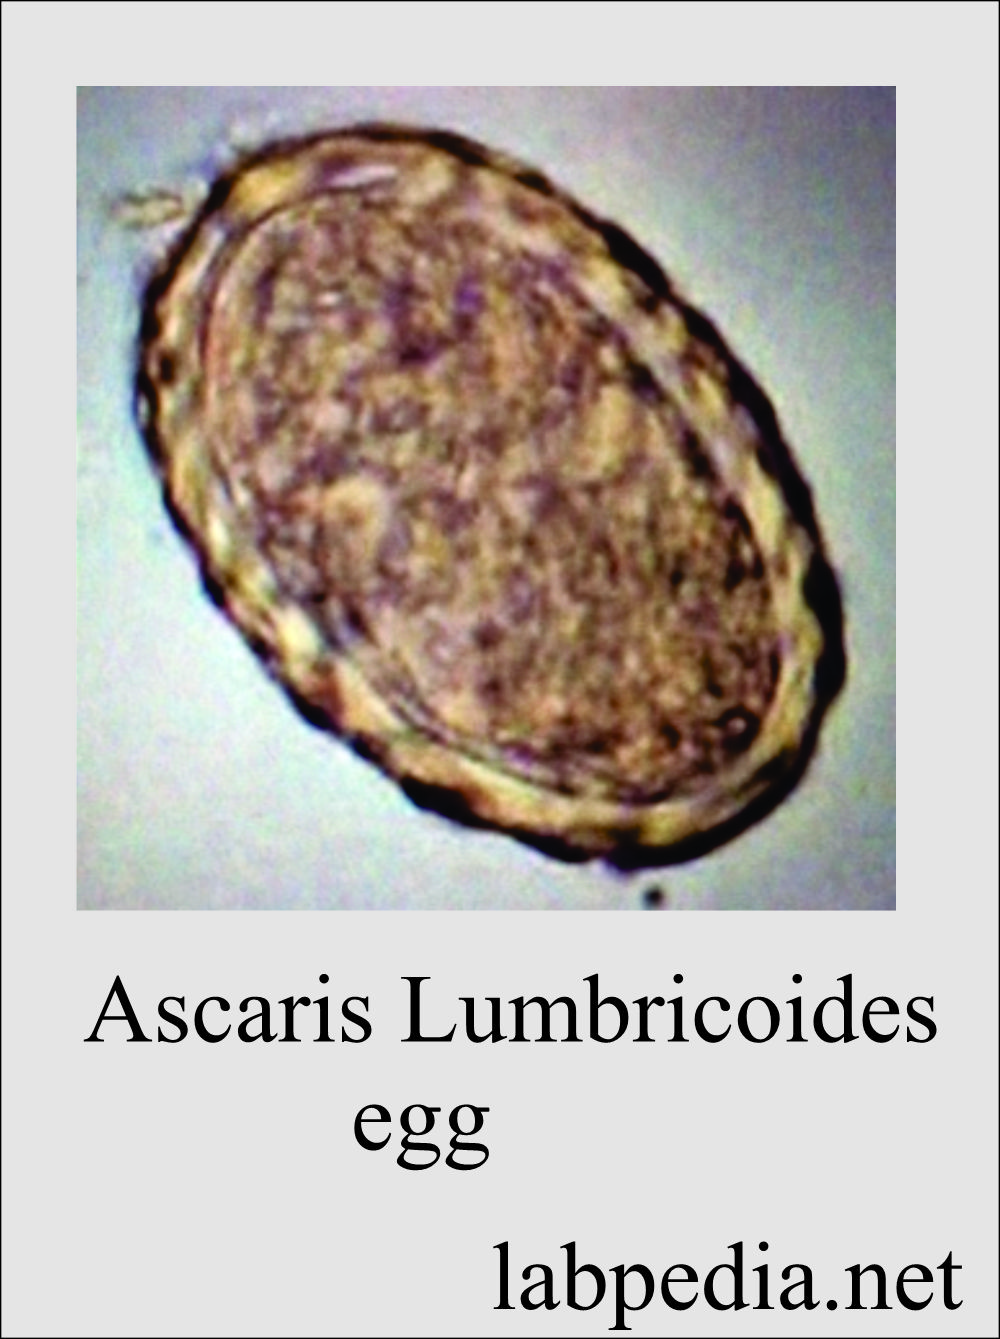 Common parasites: Ascaris lumbricoides egg